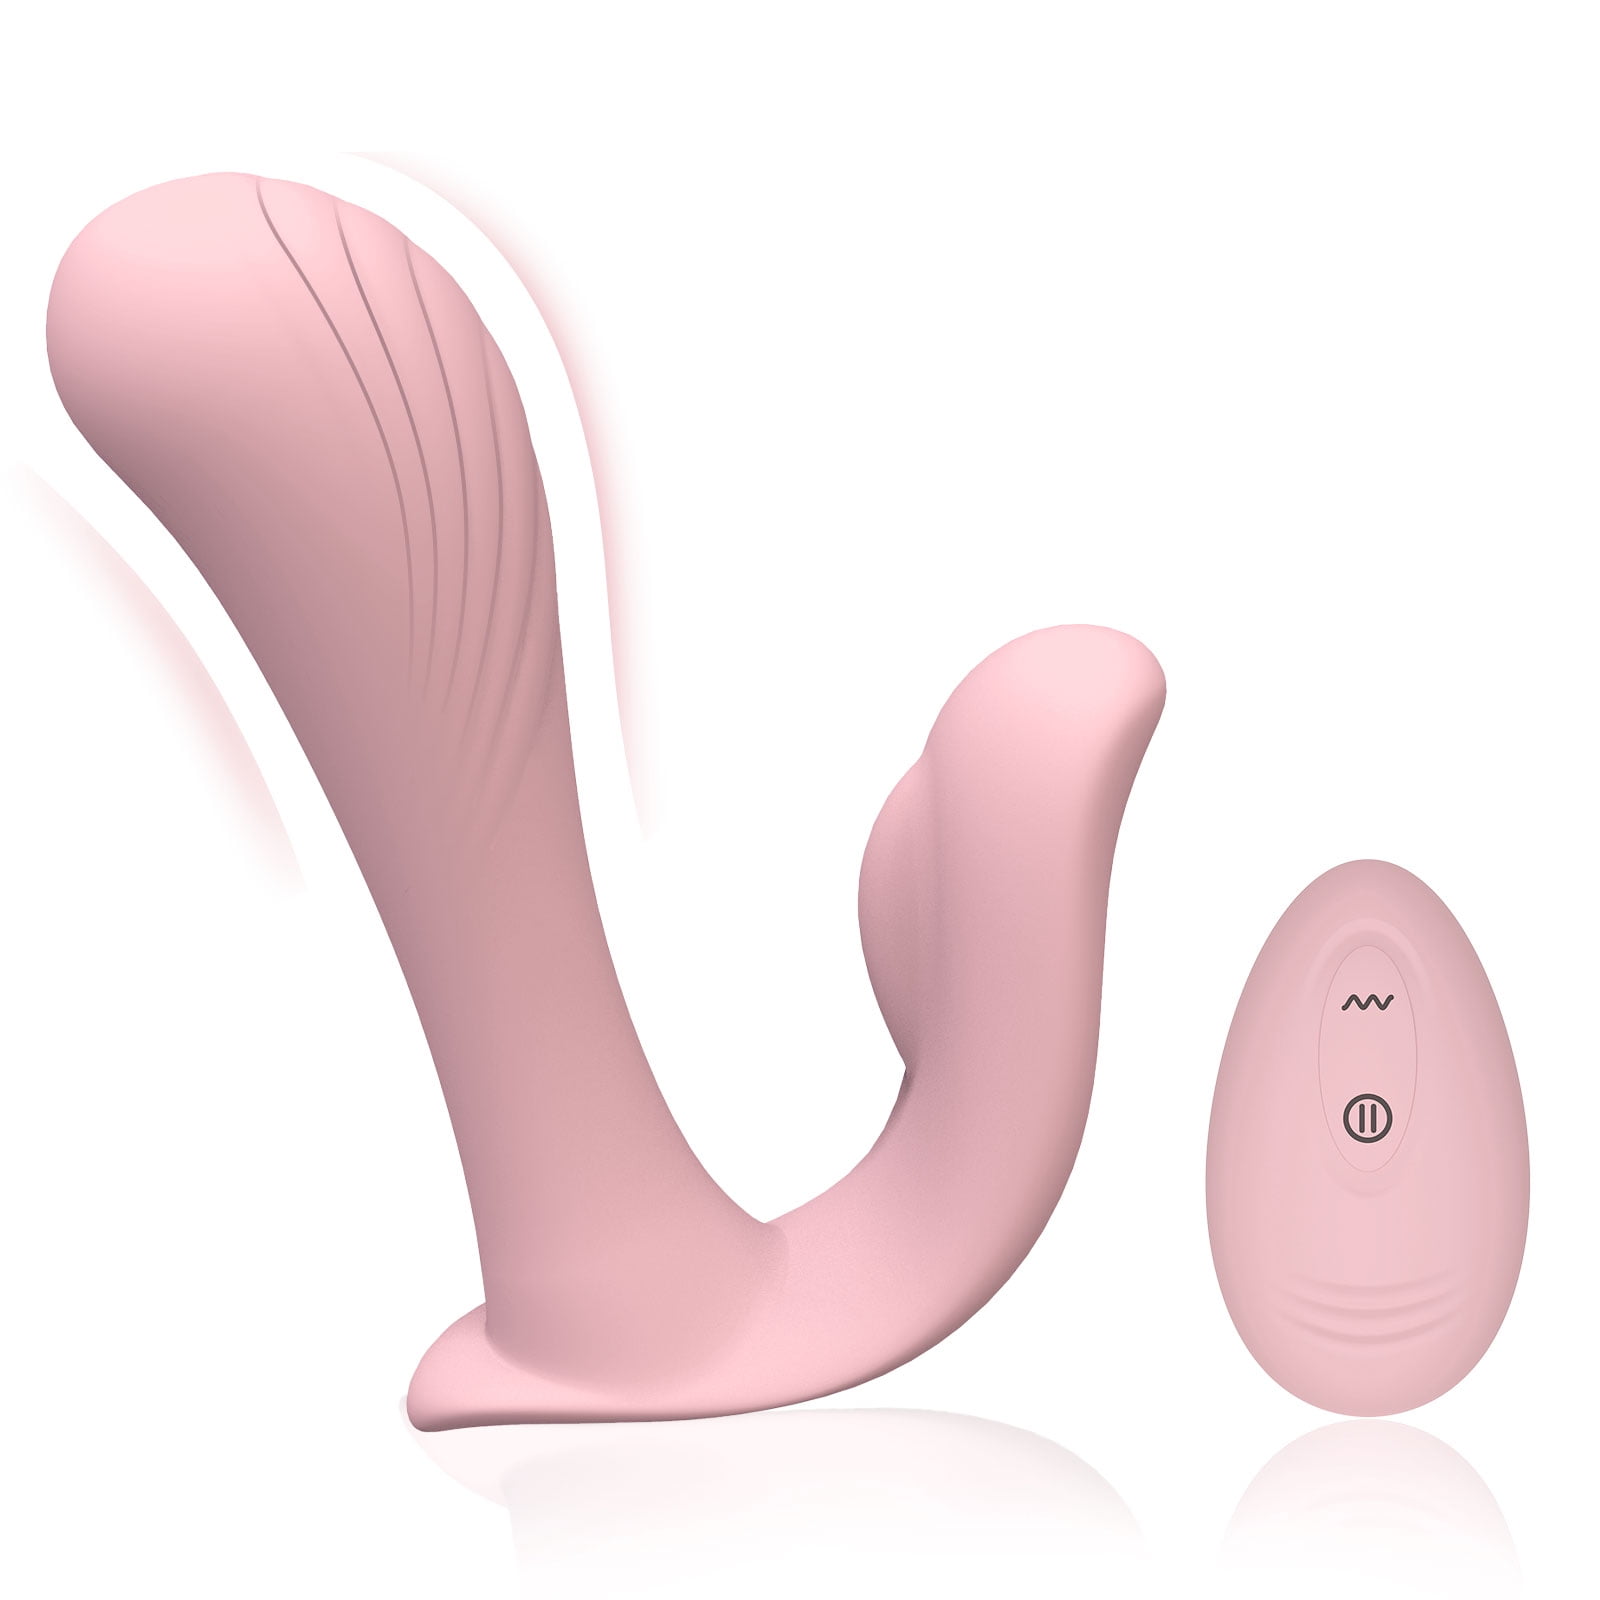 bad wives tgp cleaner clitoris vacuum